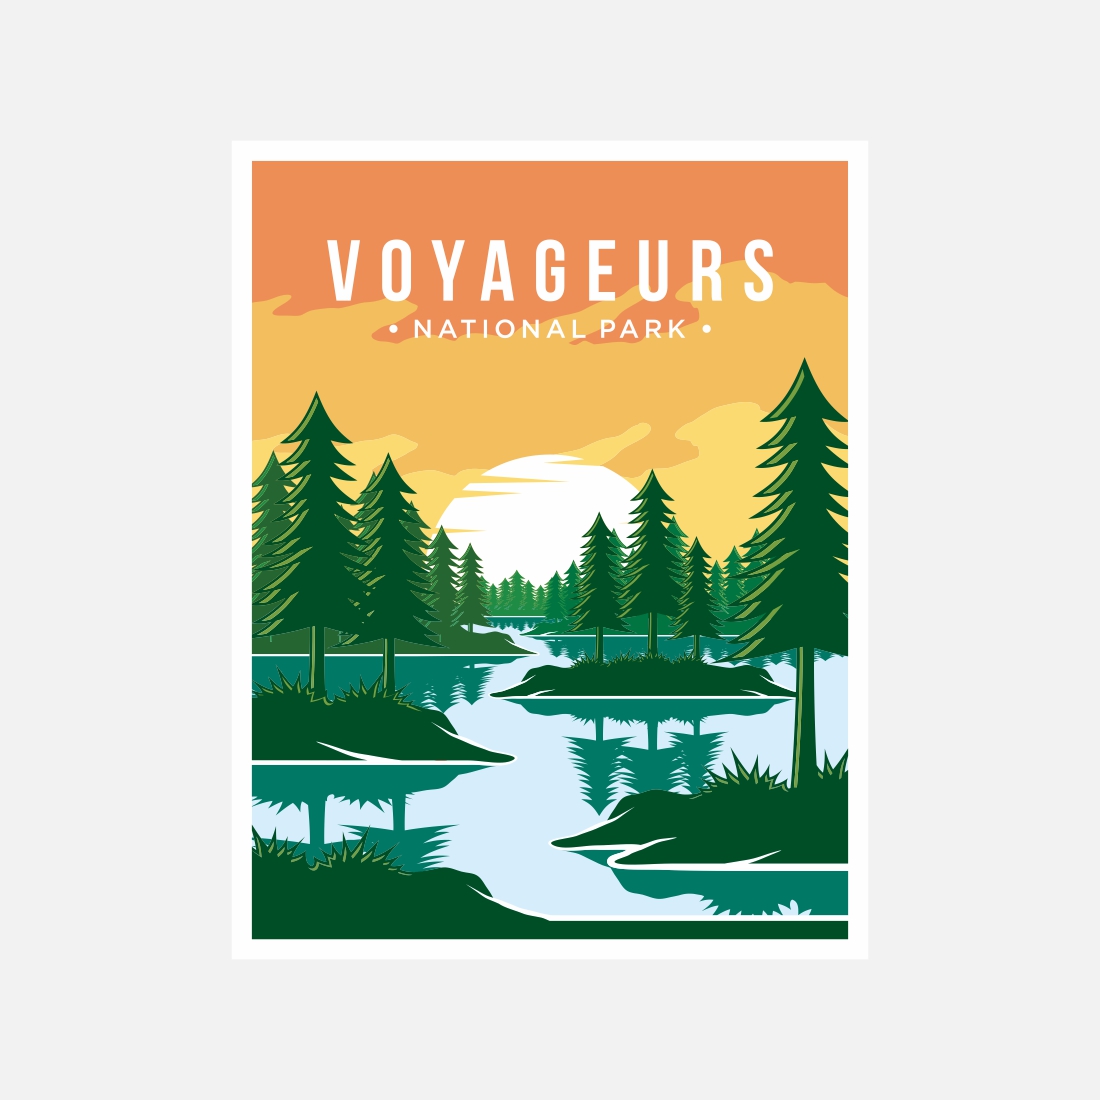 Voyageurs National Park poster vector illustration design – Only $8 preview image.